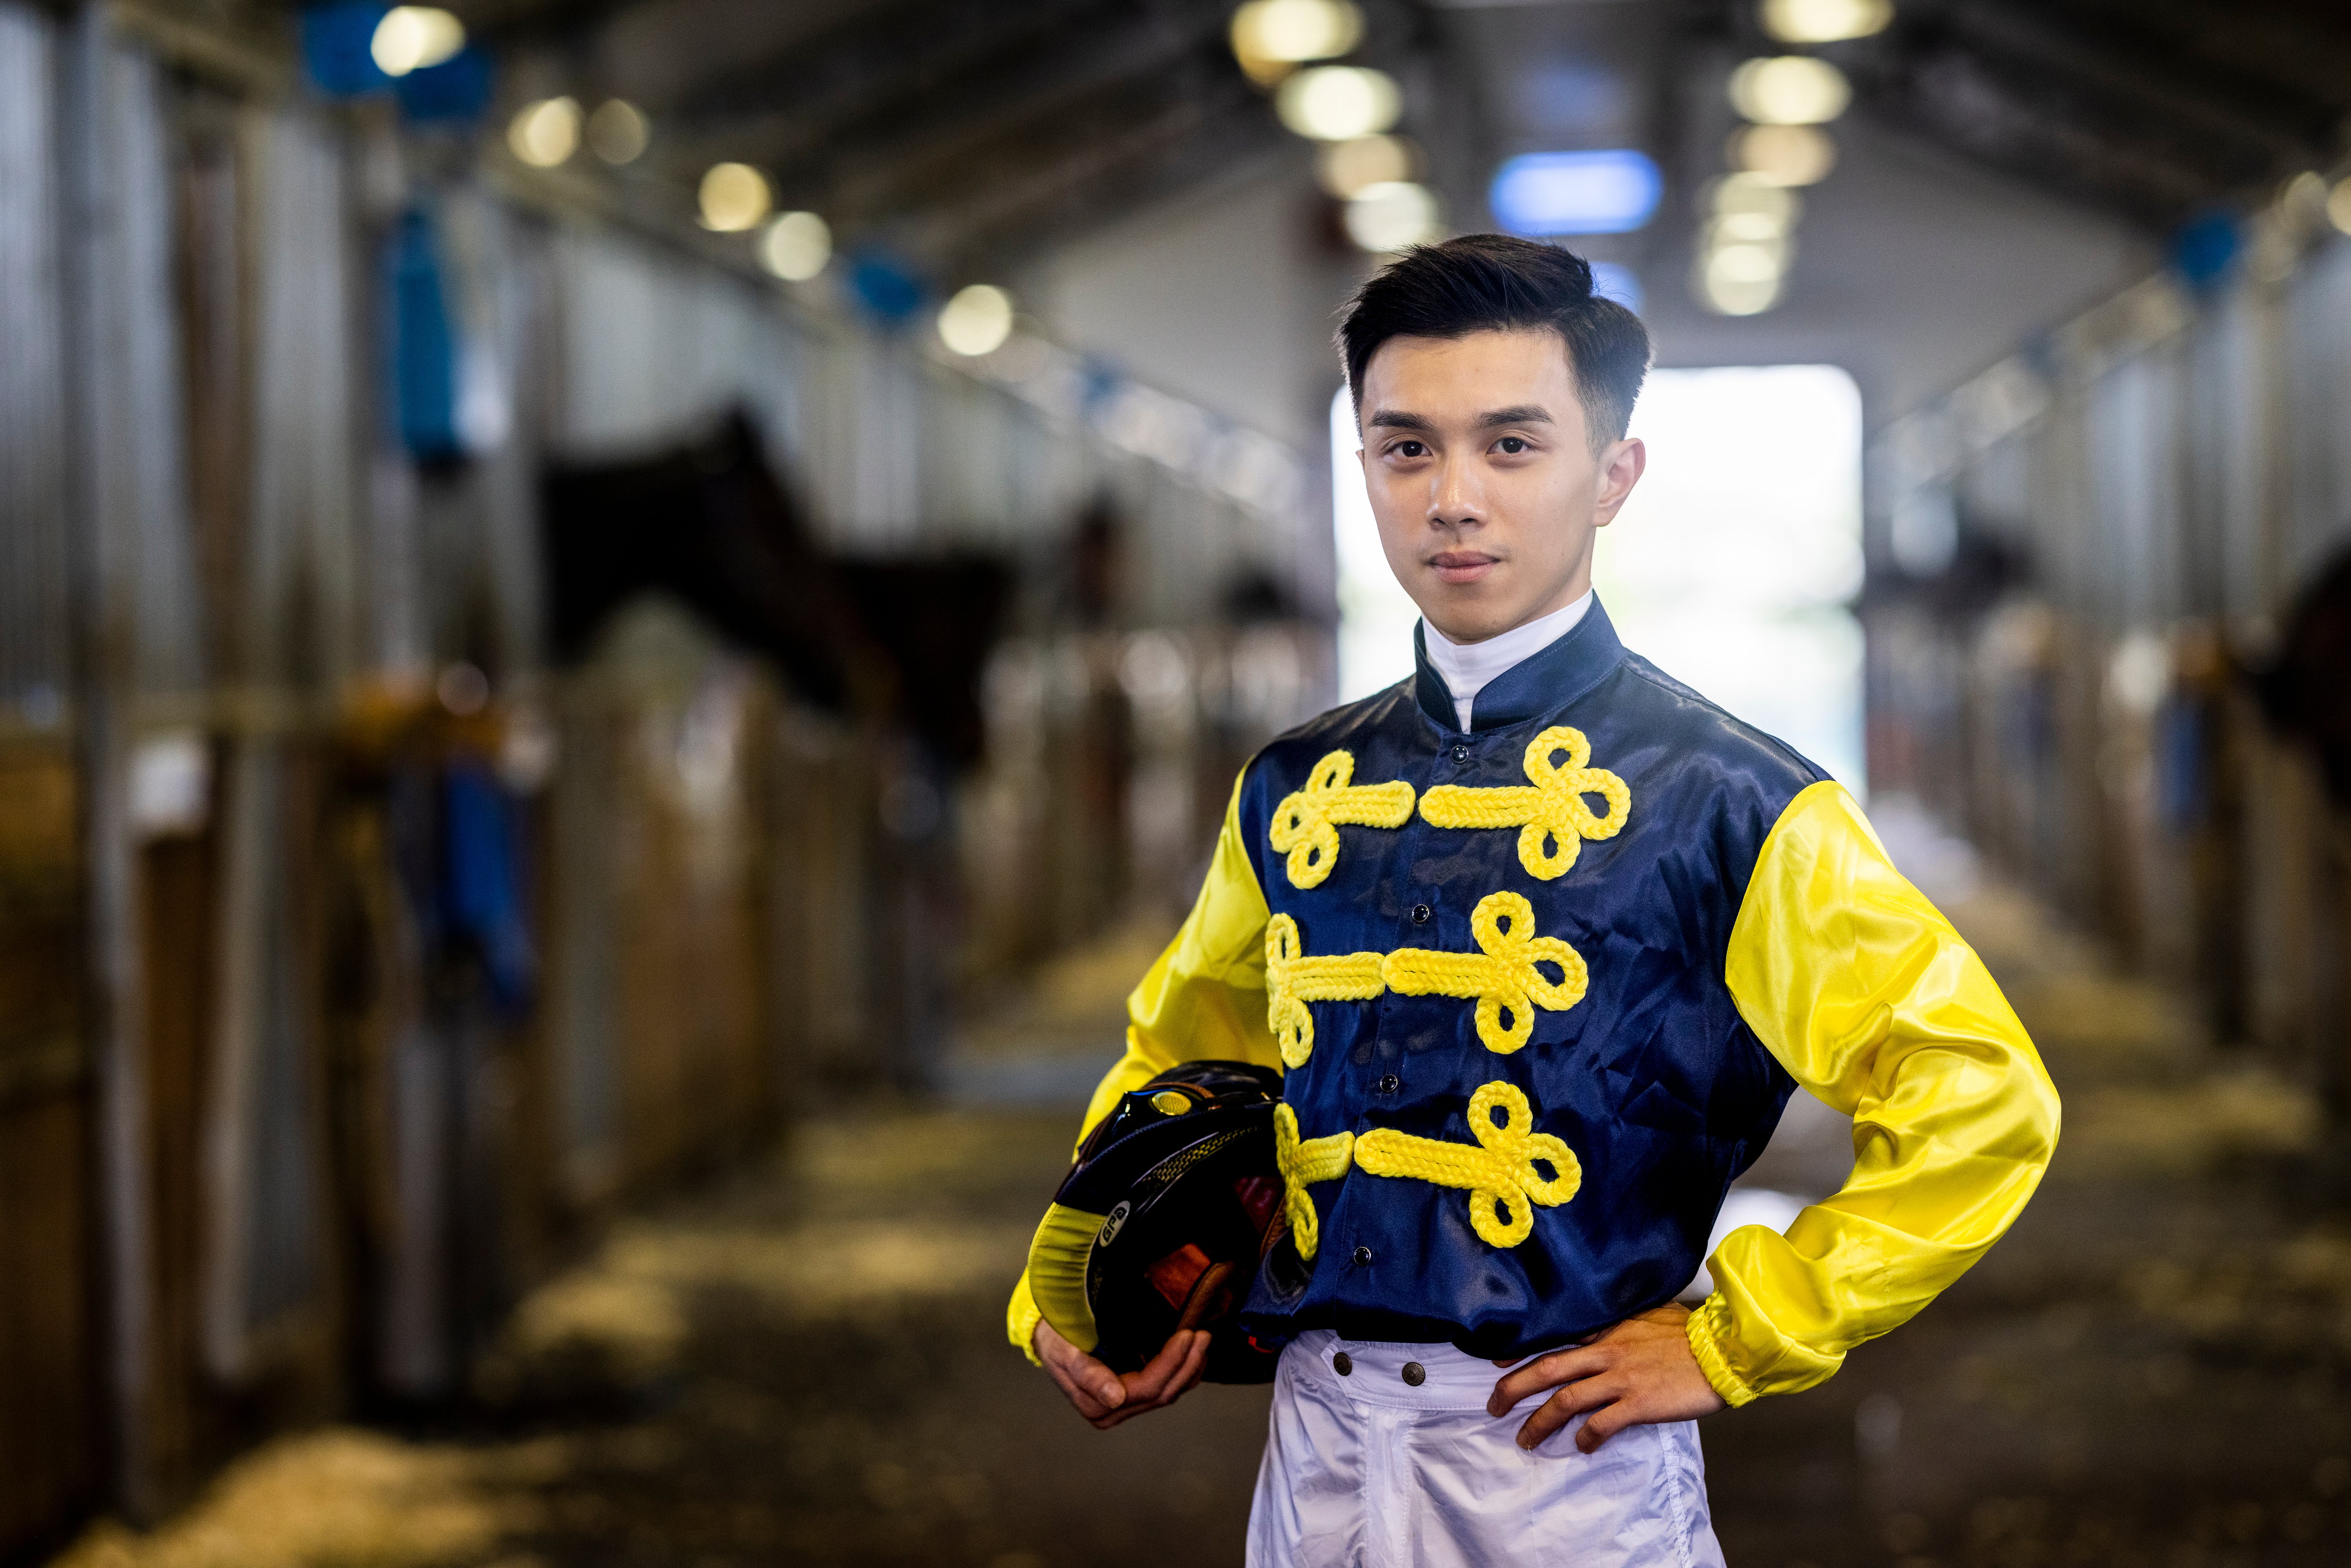 Angus Chung maintains a highly disciplined life as an apprentice jockey.